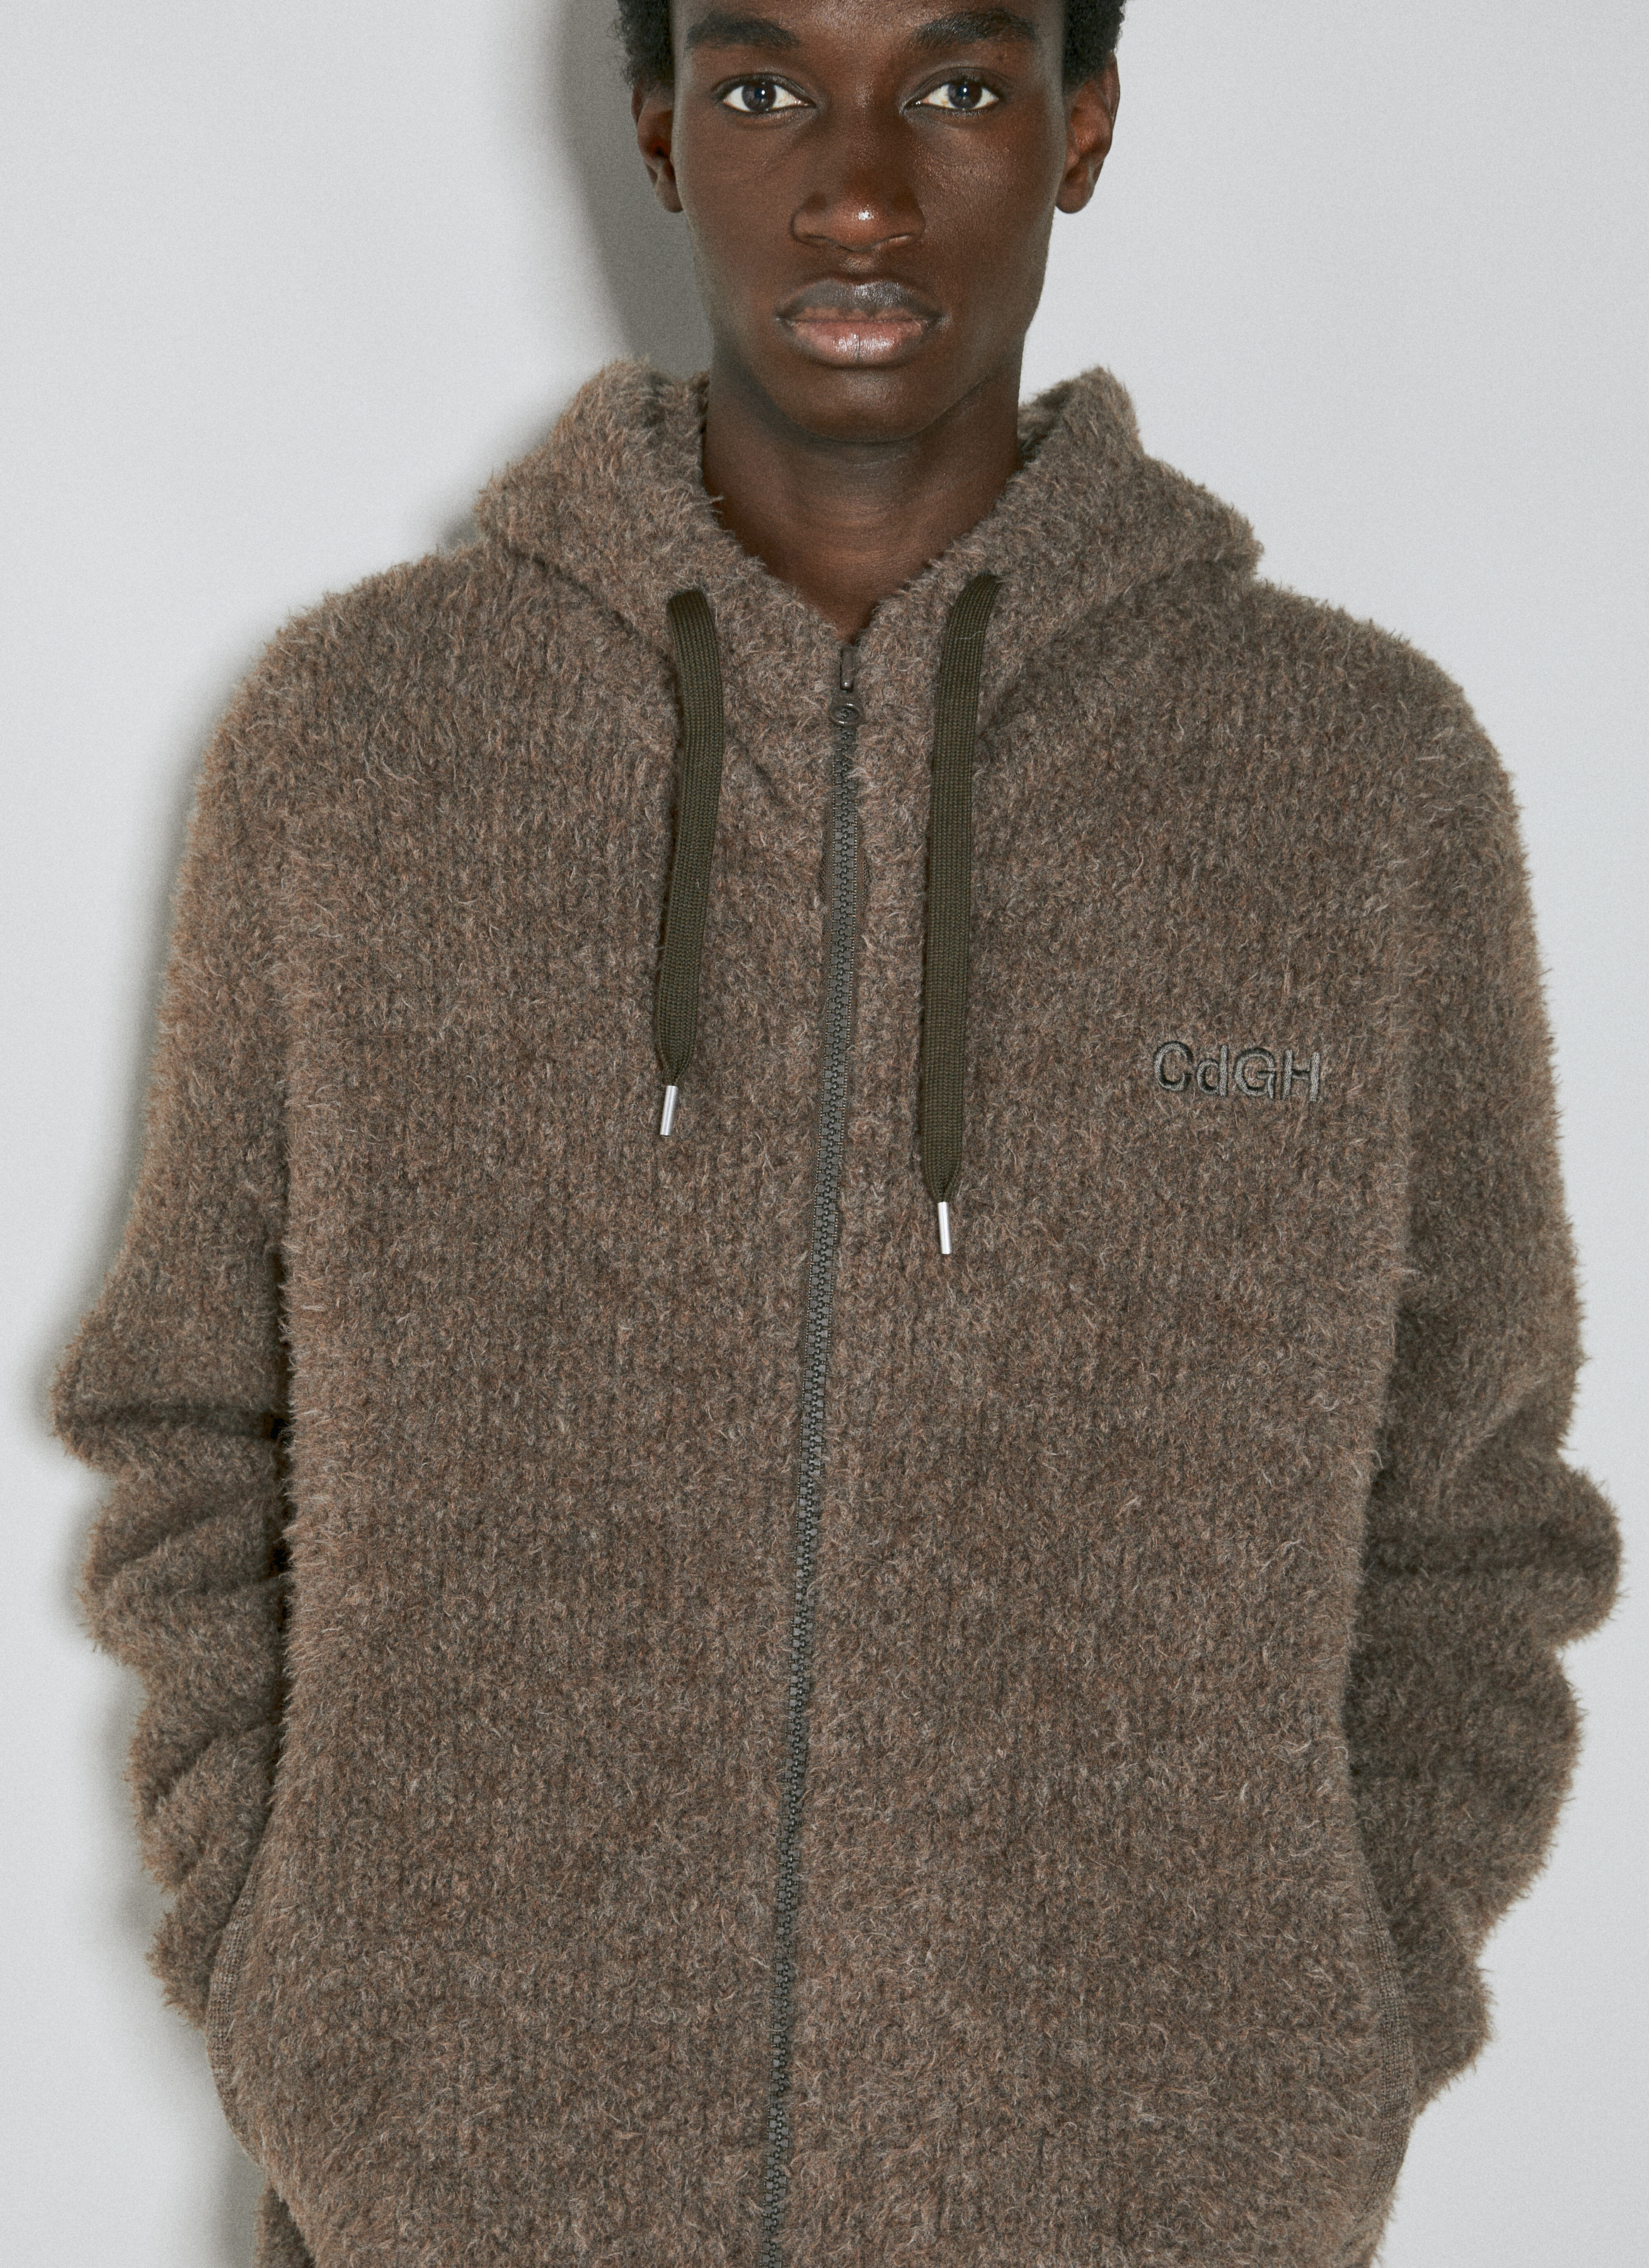 Comme des Garçons Homme x New Balance Fluffy Knit Hooded Zip-Up Sweatshirt Black cgn0156001